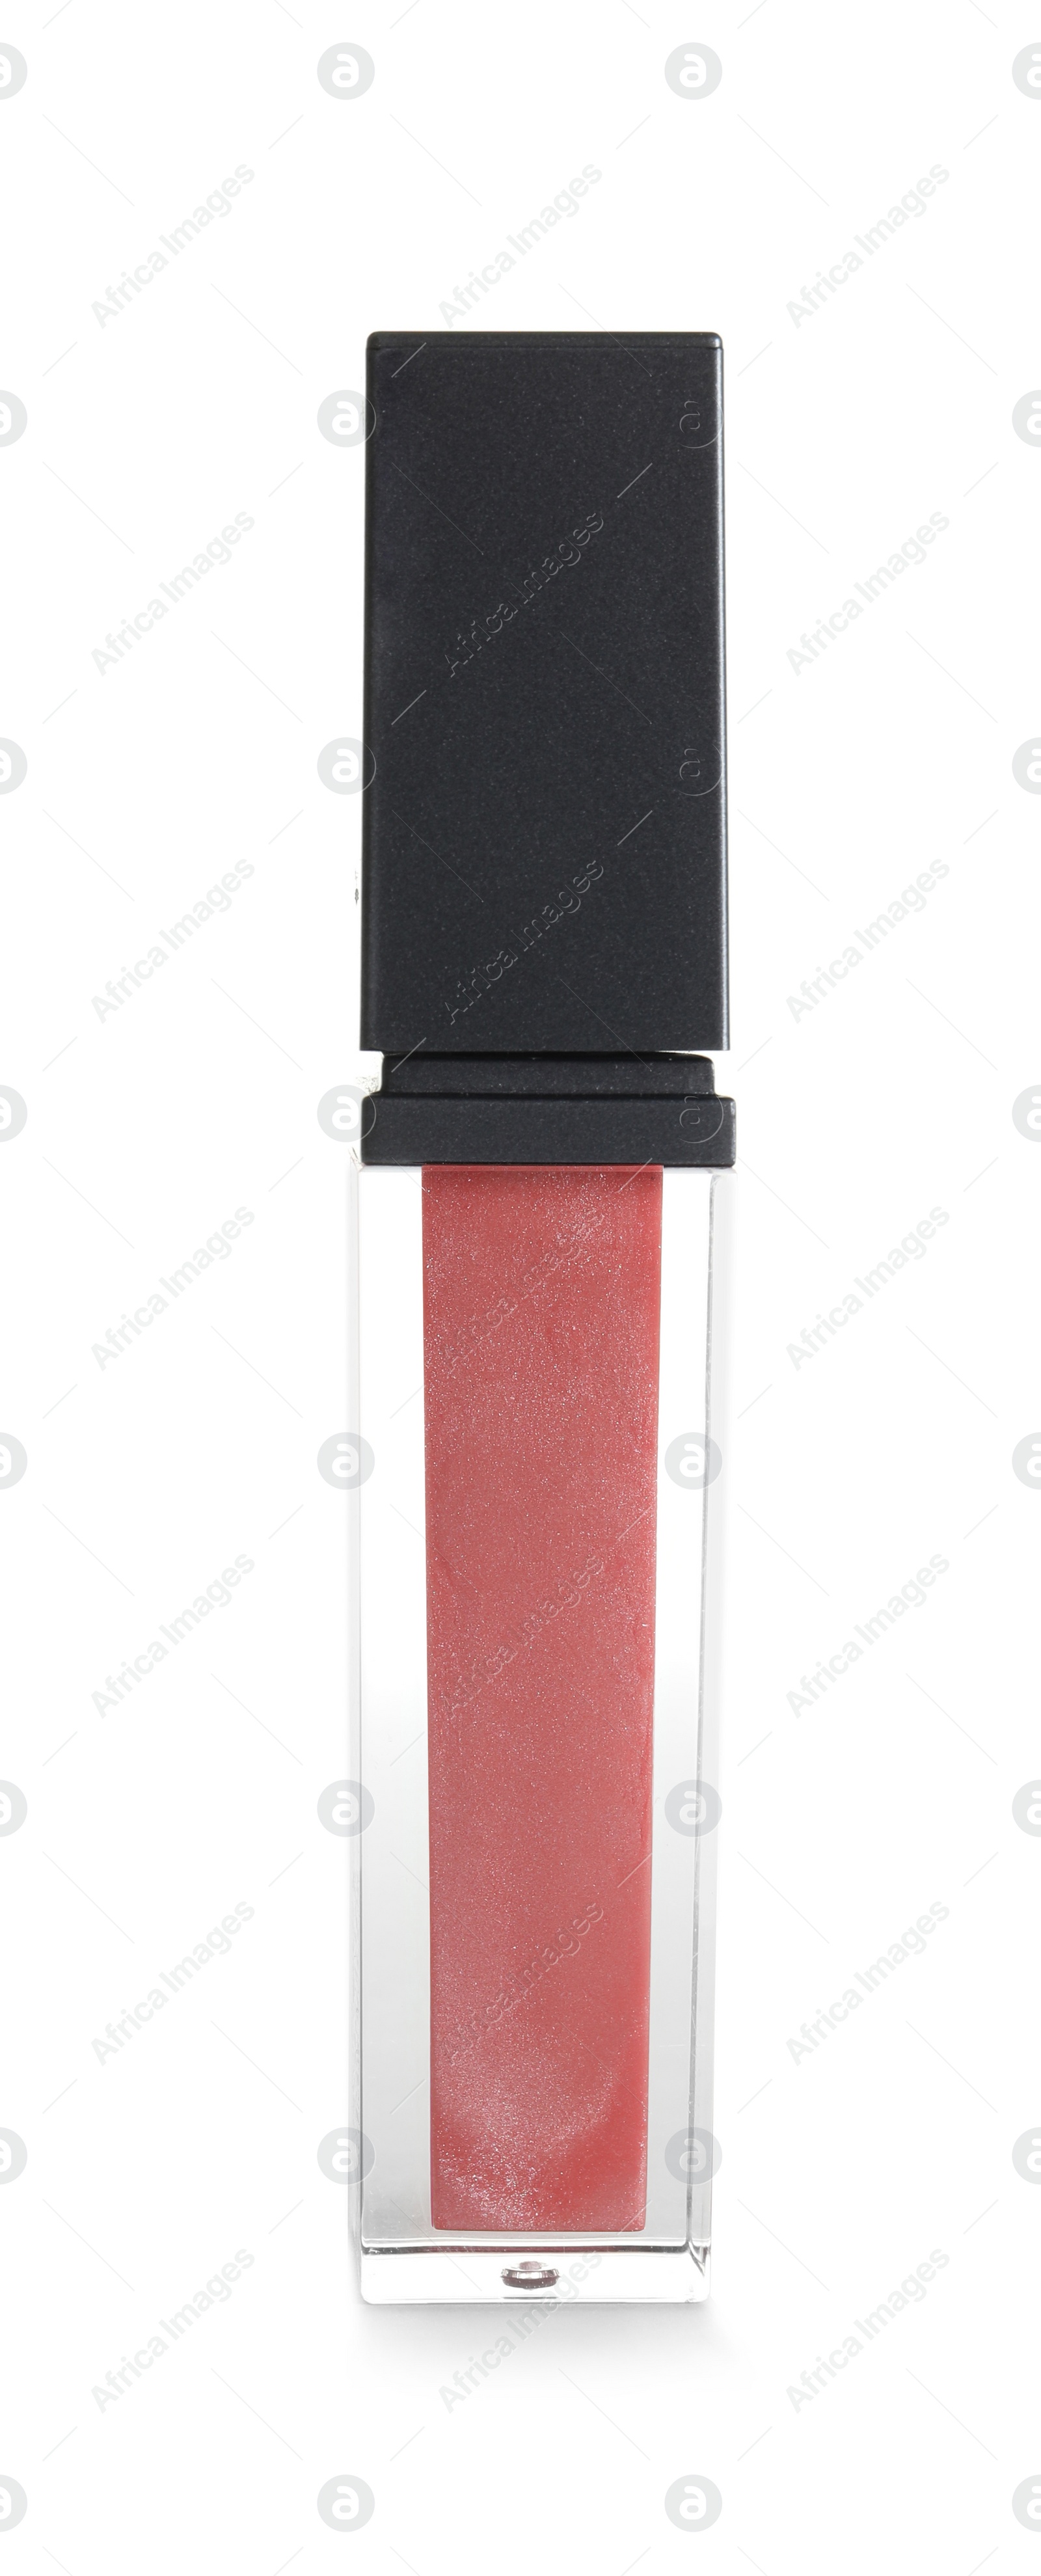 Photo of Tube of liquid lipstick isolated on white